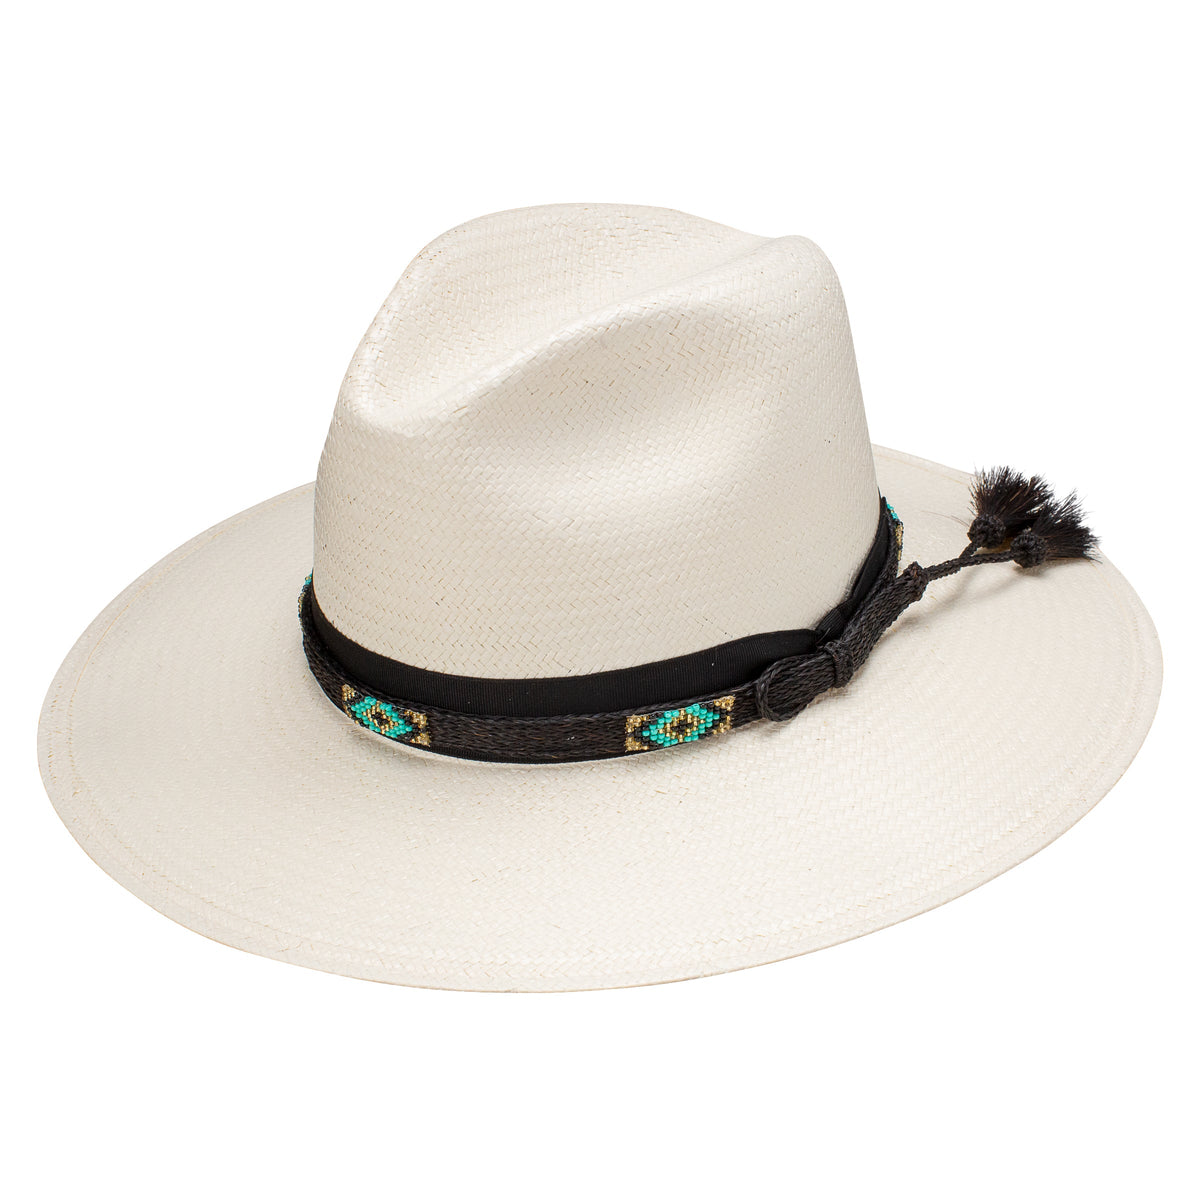 Stetson Safari khaki Women's Hats